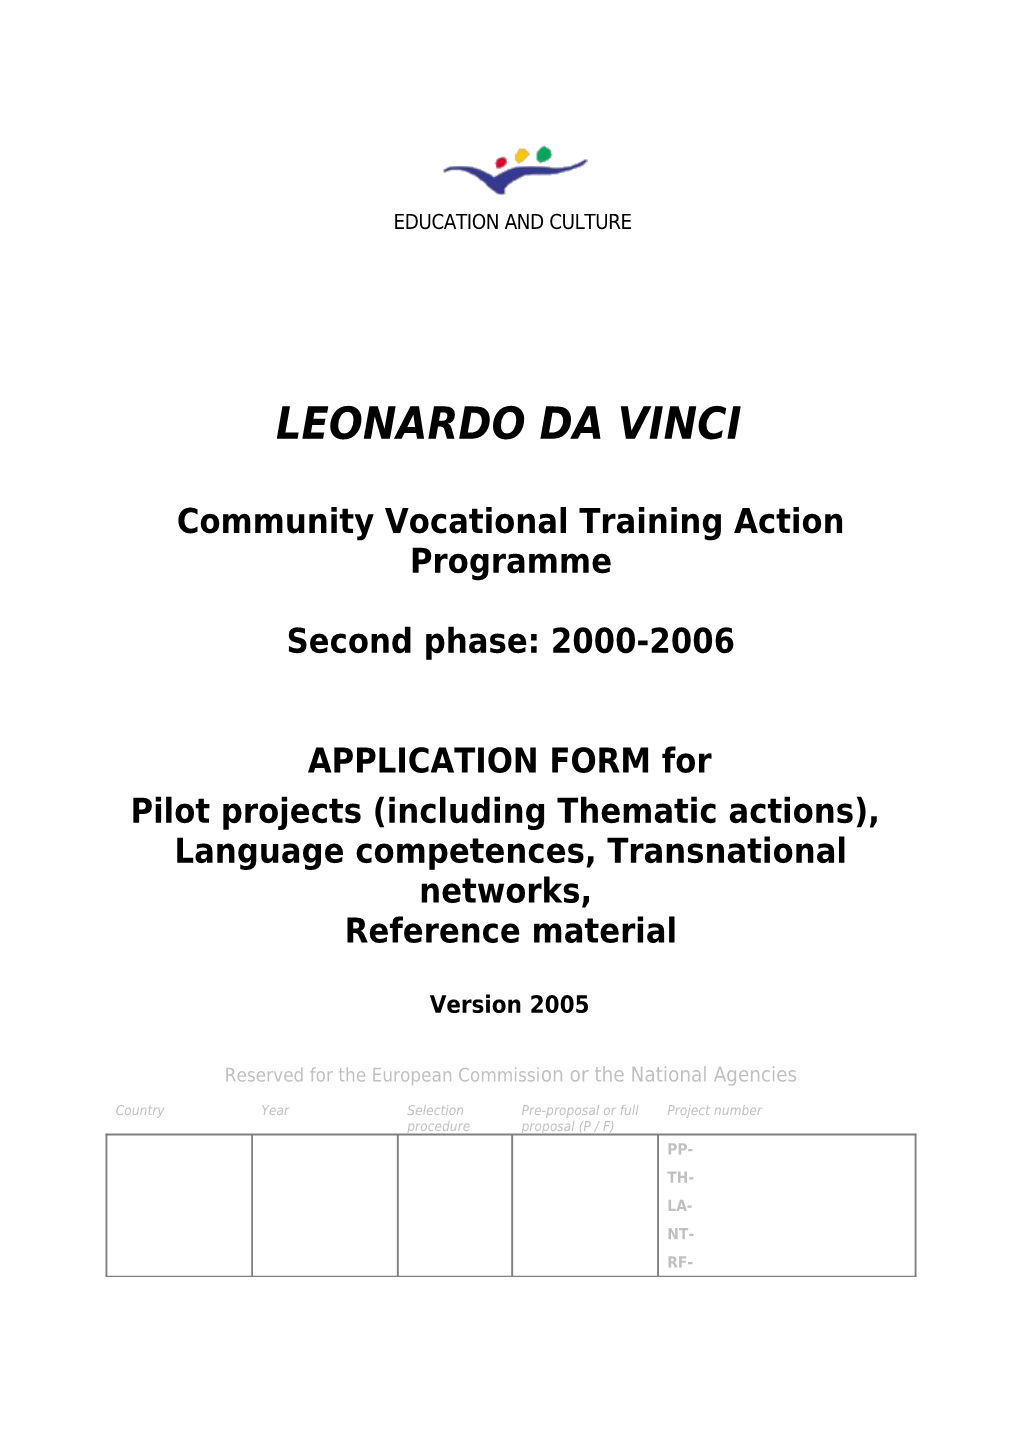 Community Vocational Training Action Programme